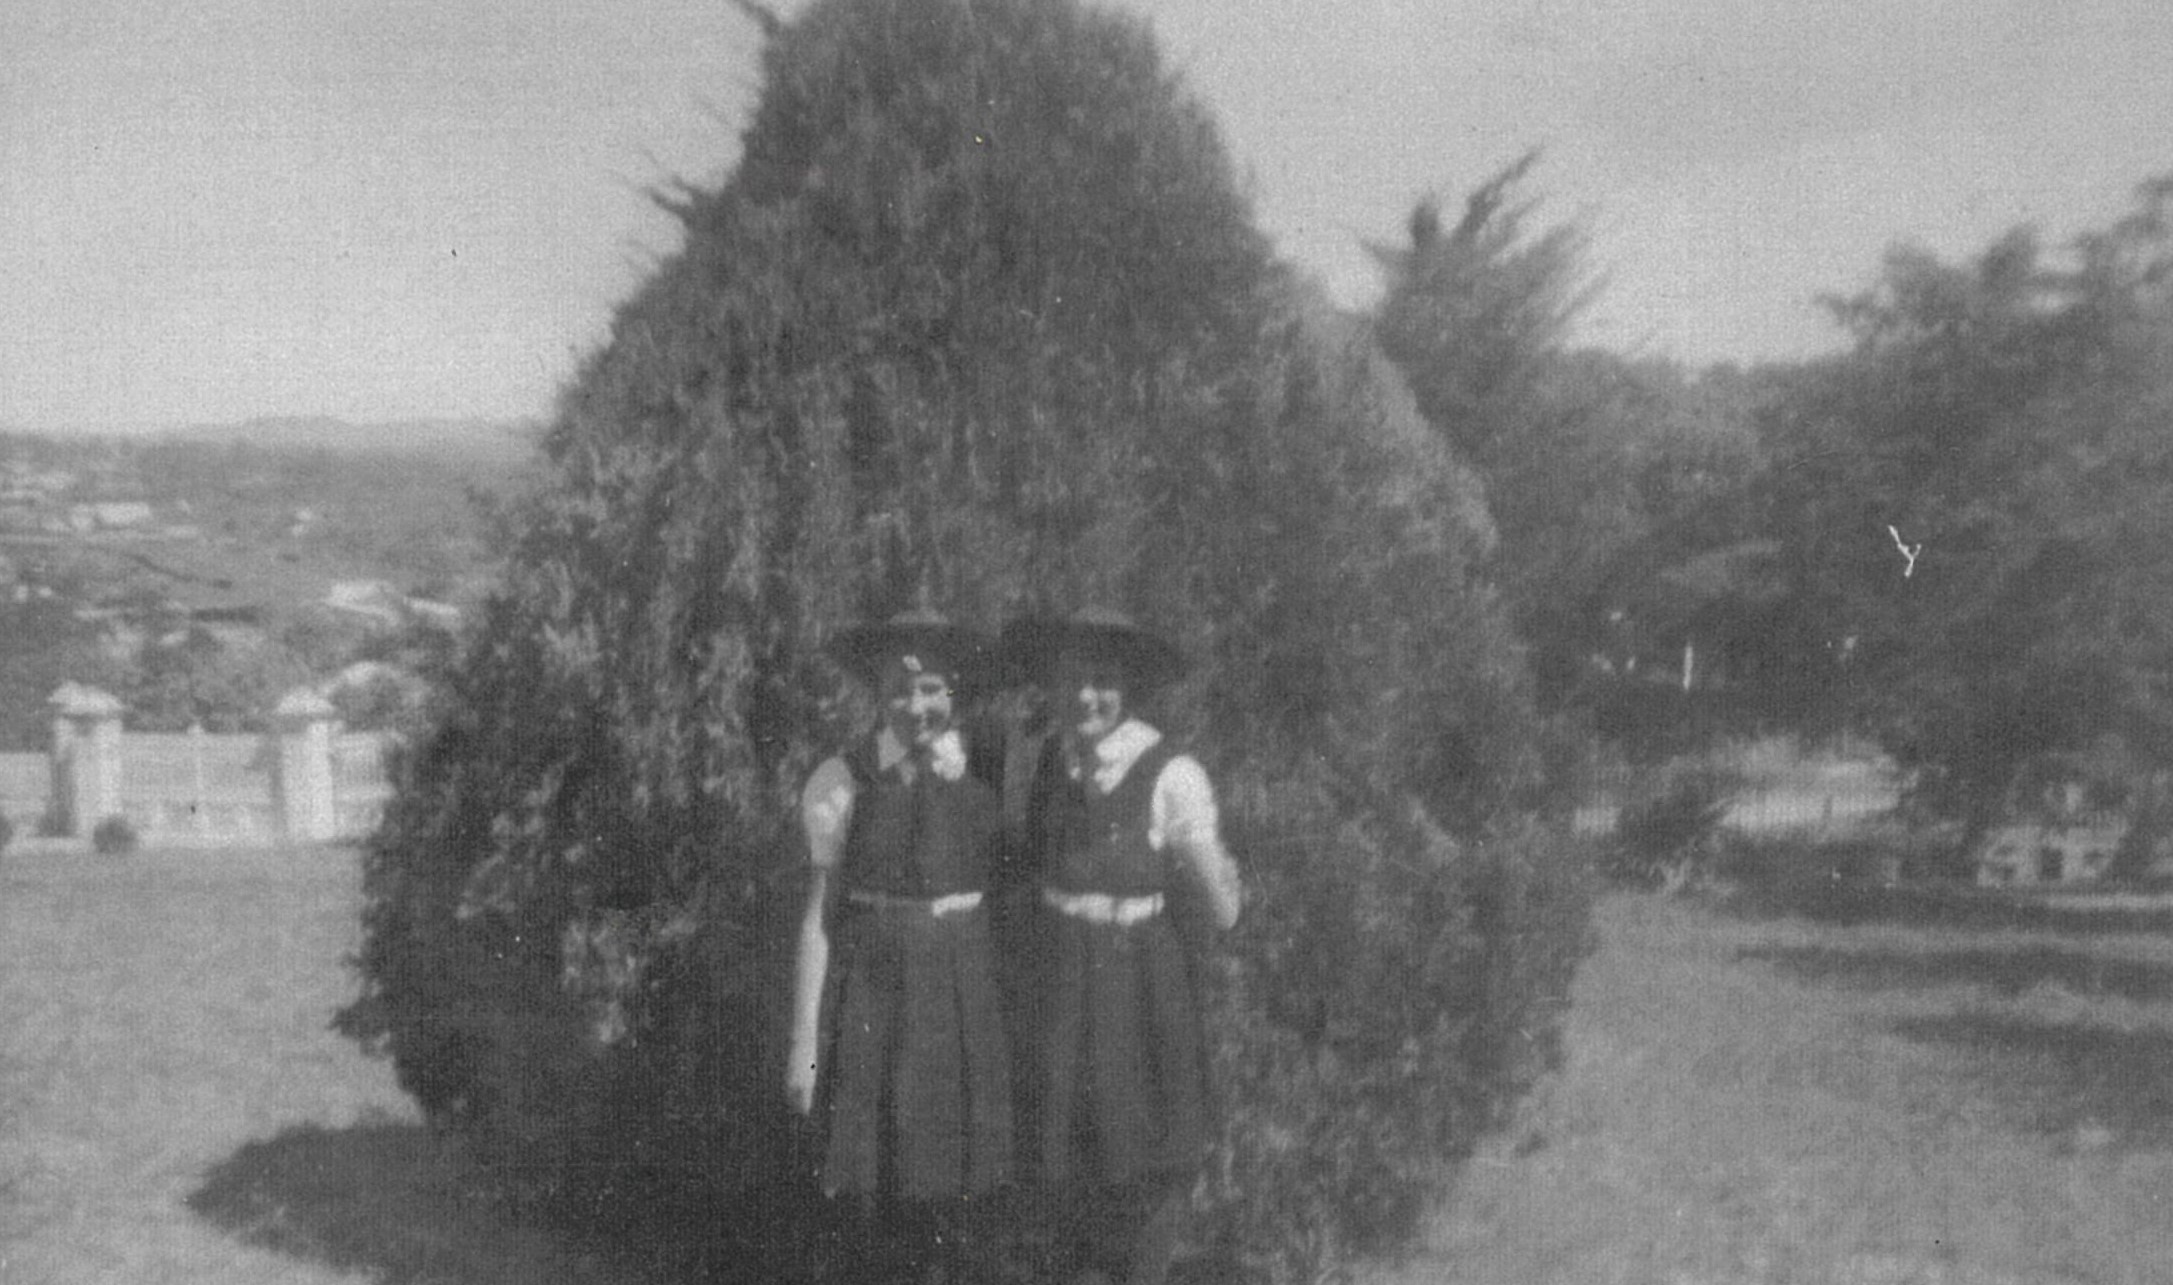 1944 Cecily Sadd and Shirley Ebrington